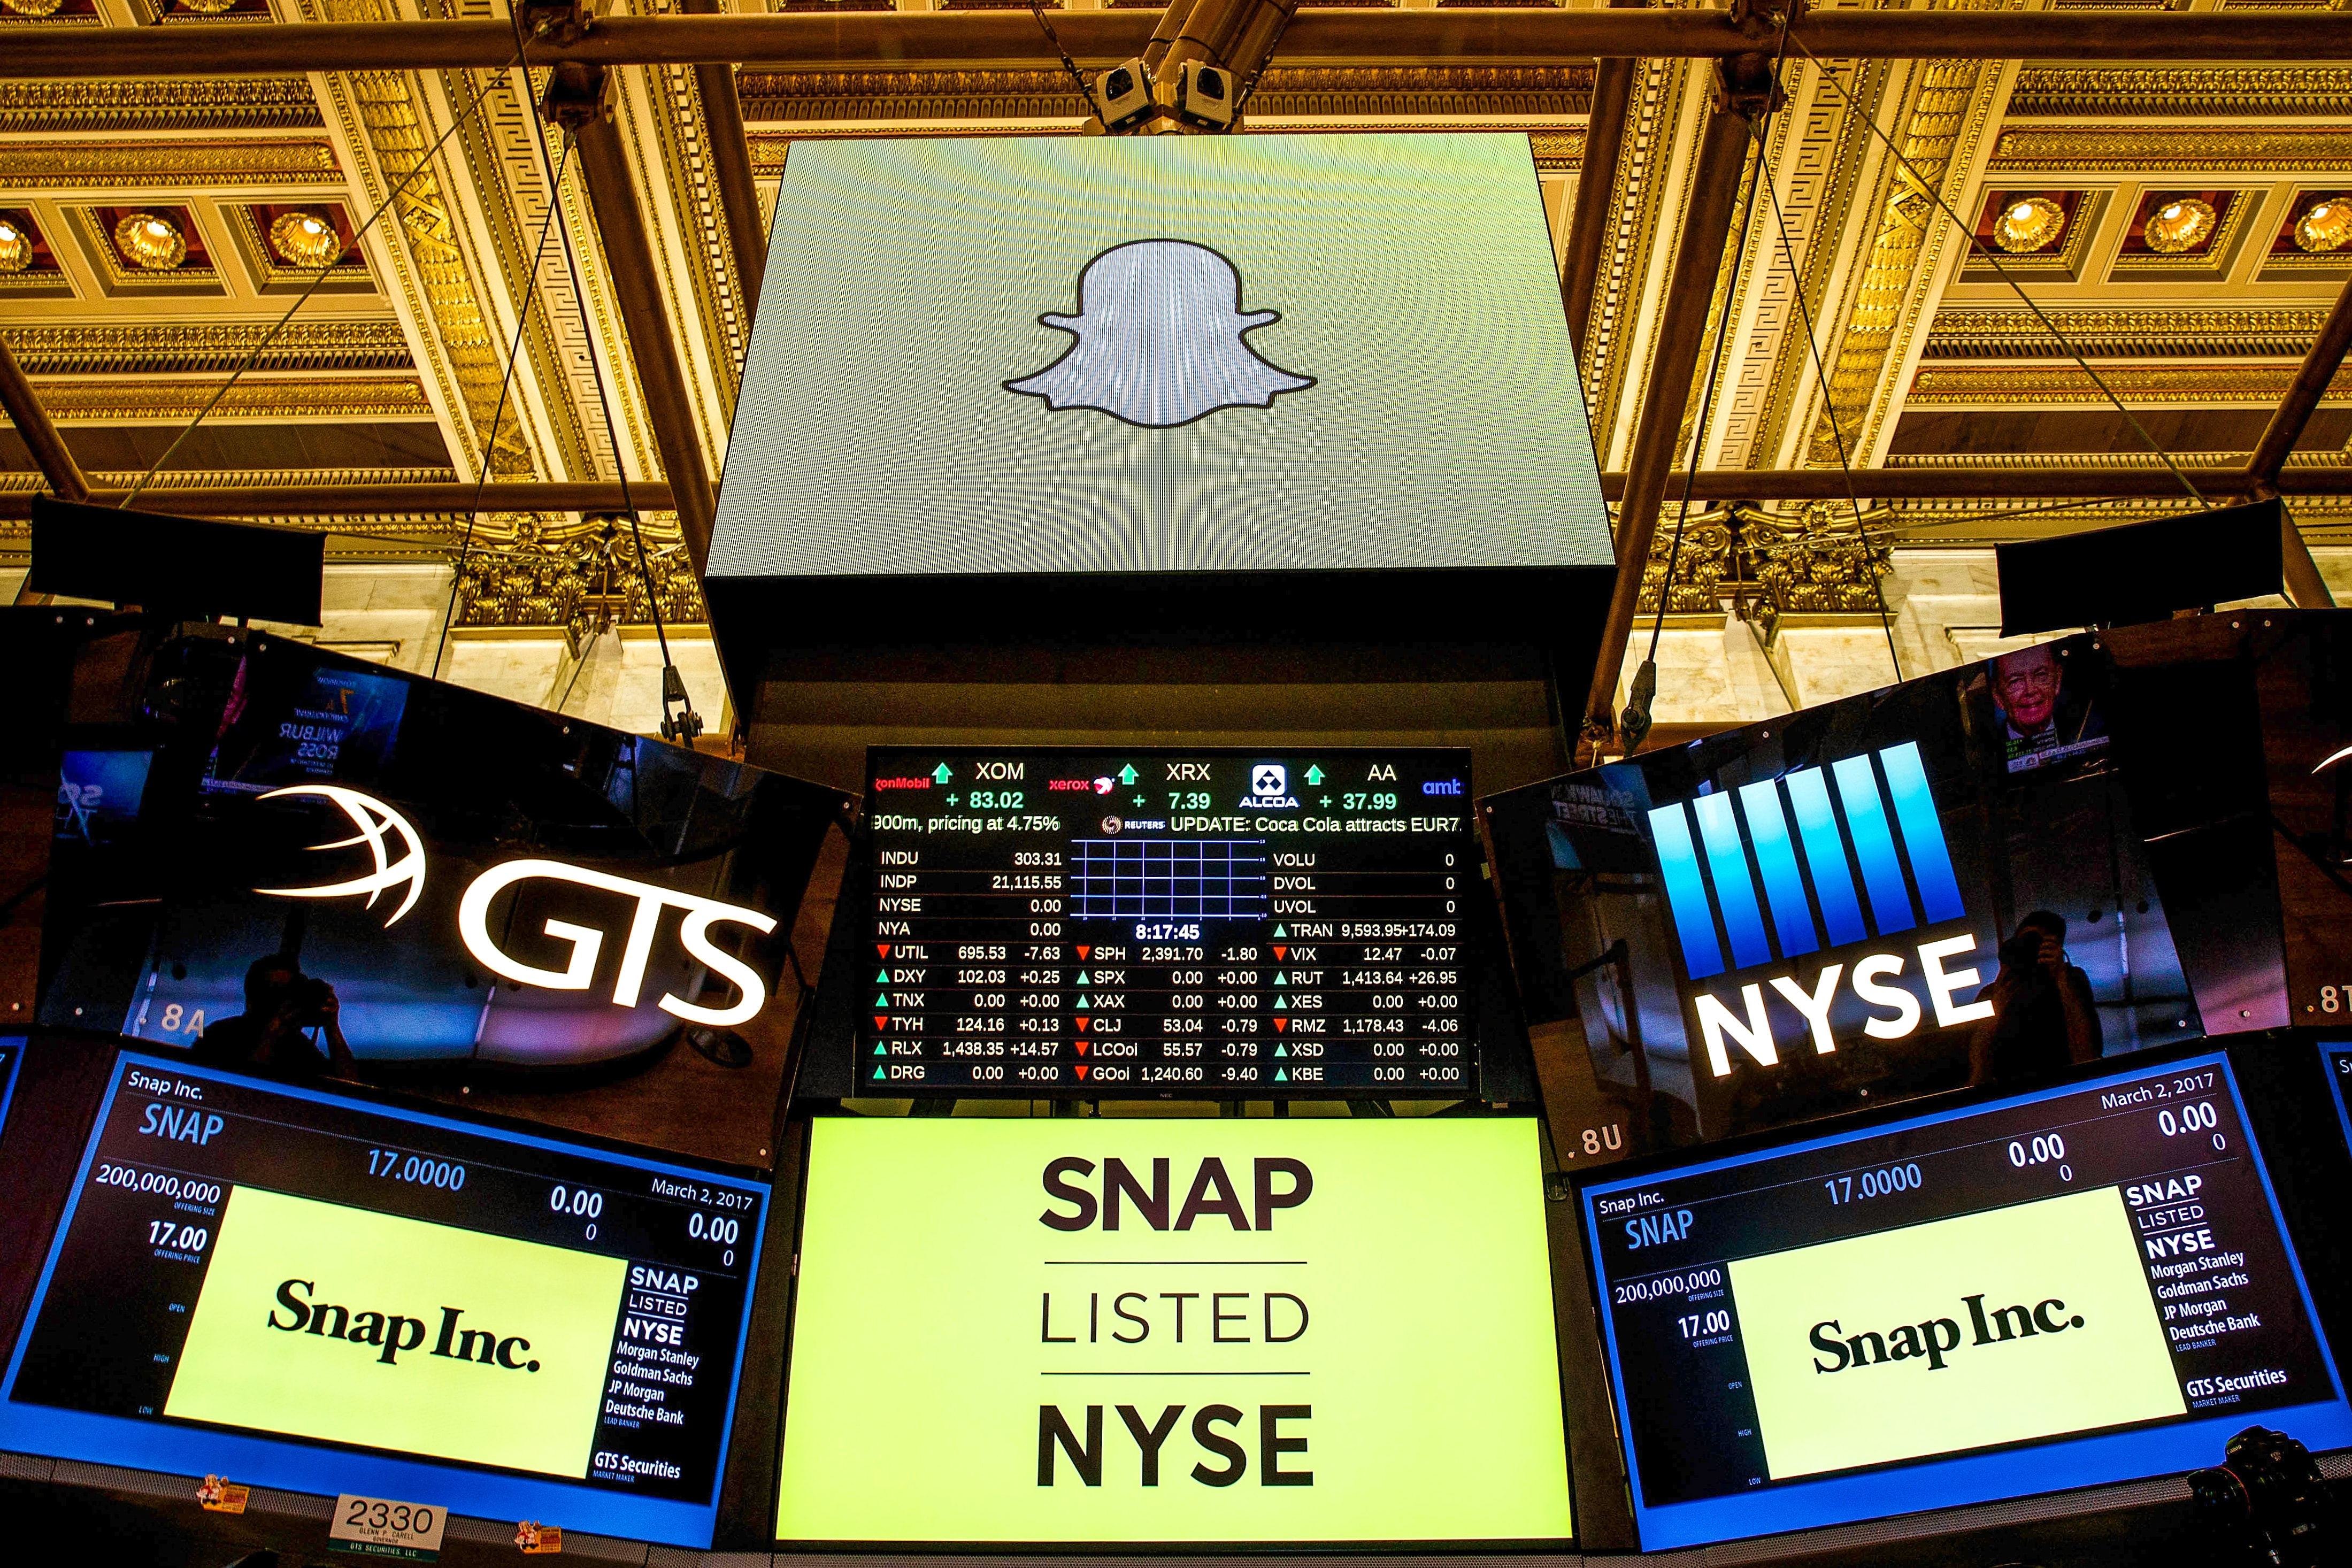 snapchat snap inc stock price trading market exchange finance investment evan spiegel 